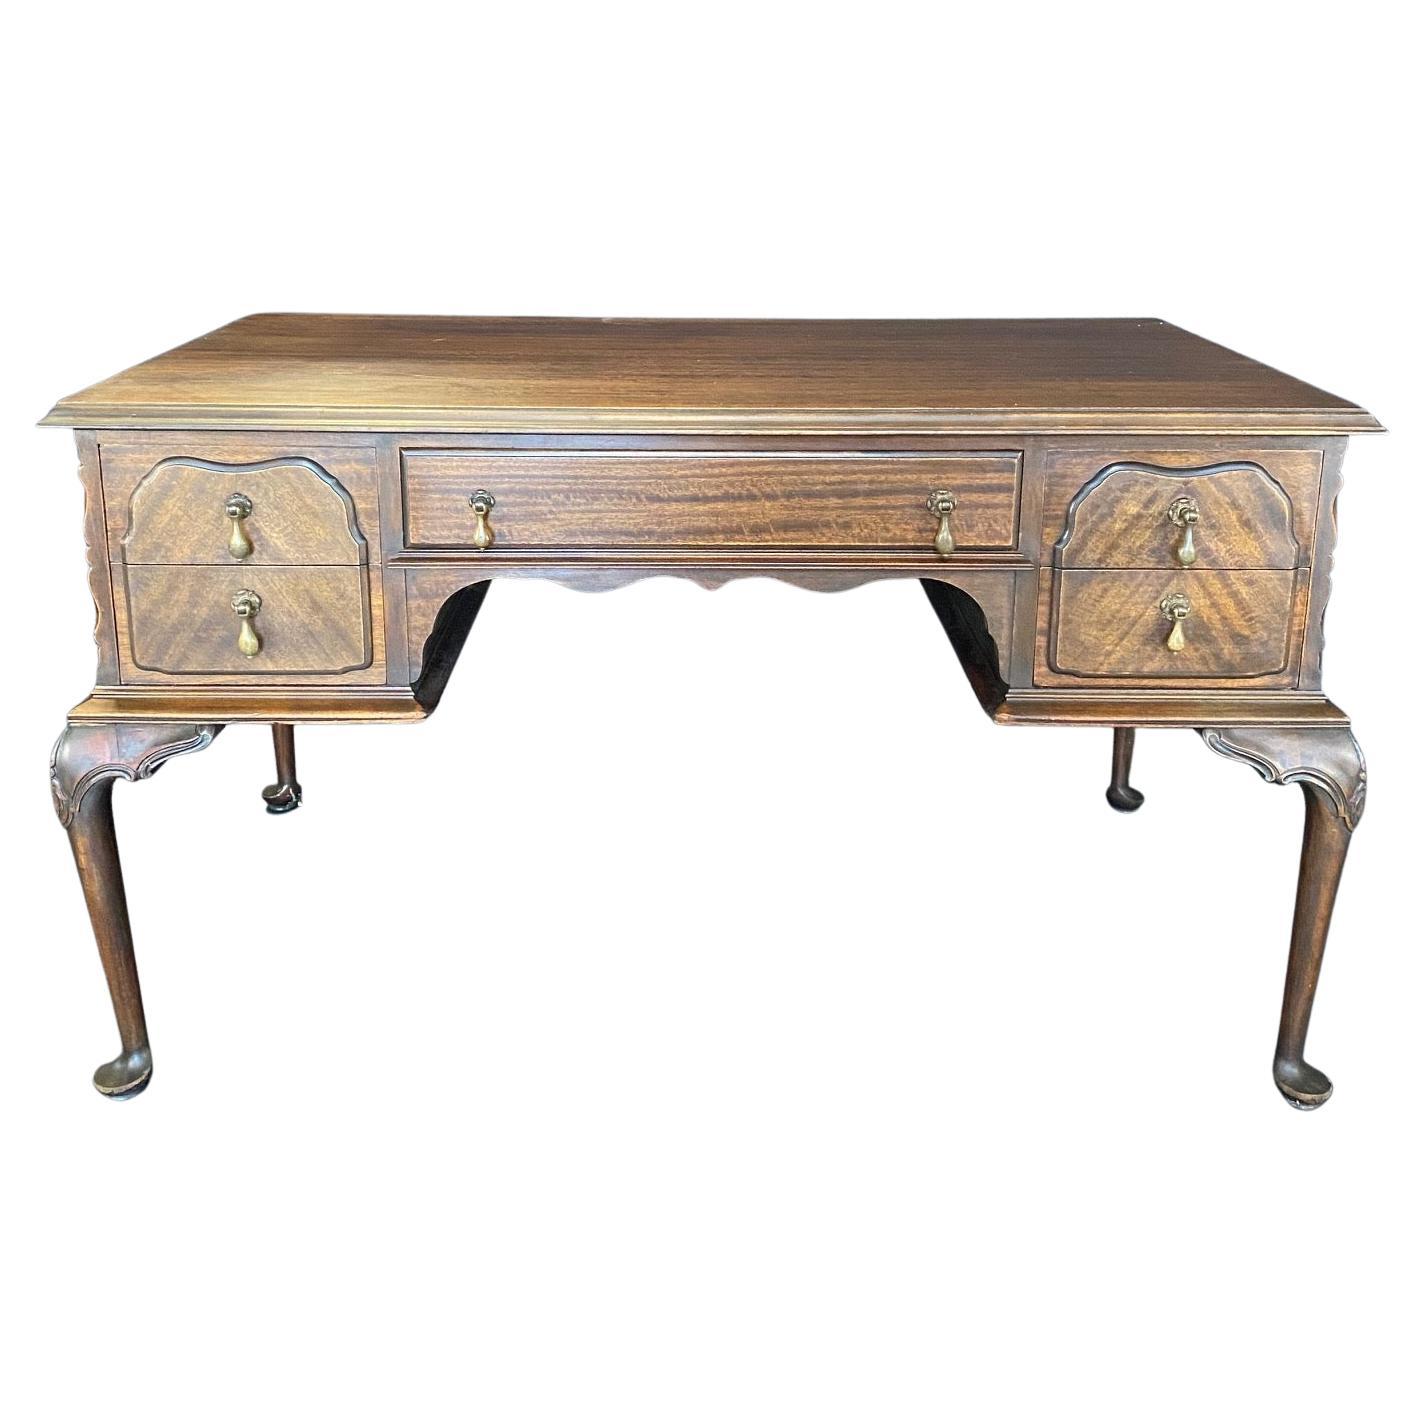 Bellissimo tavolo o scrivania francese in stile Luigi XV in vendita